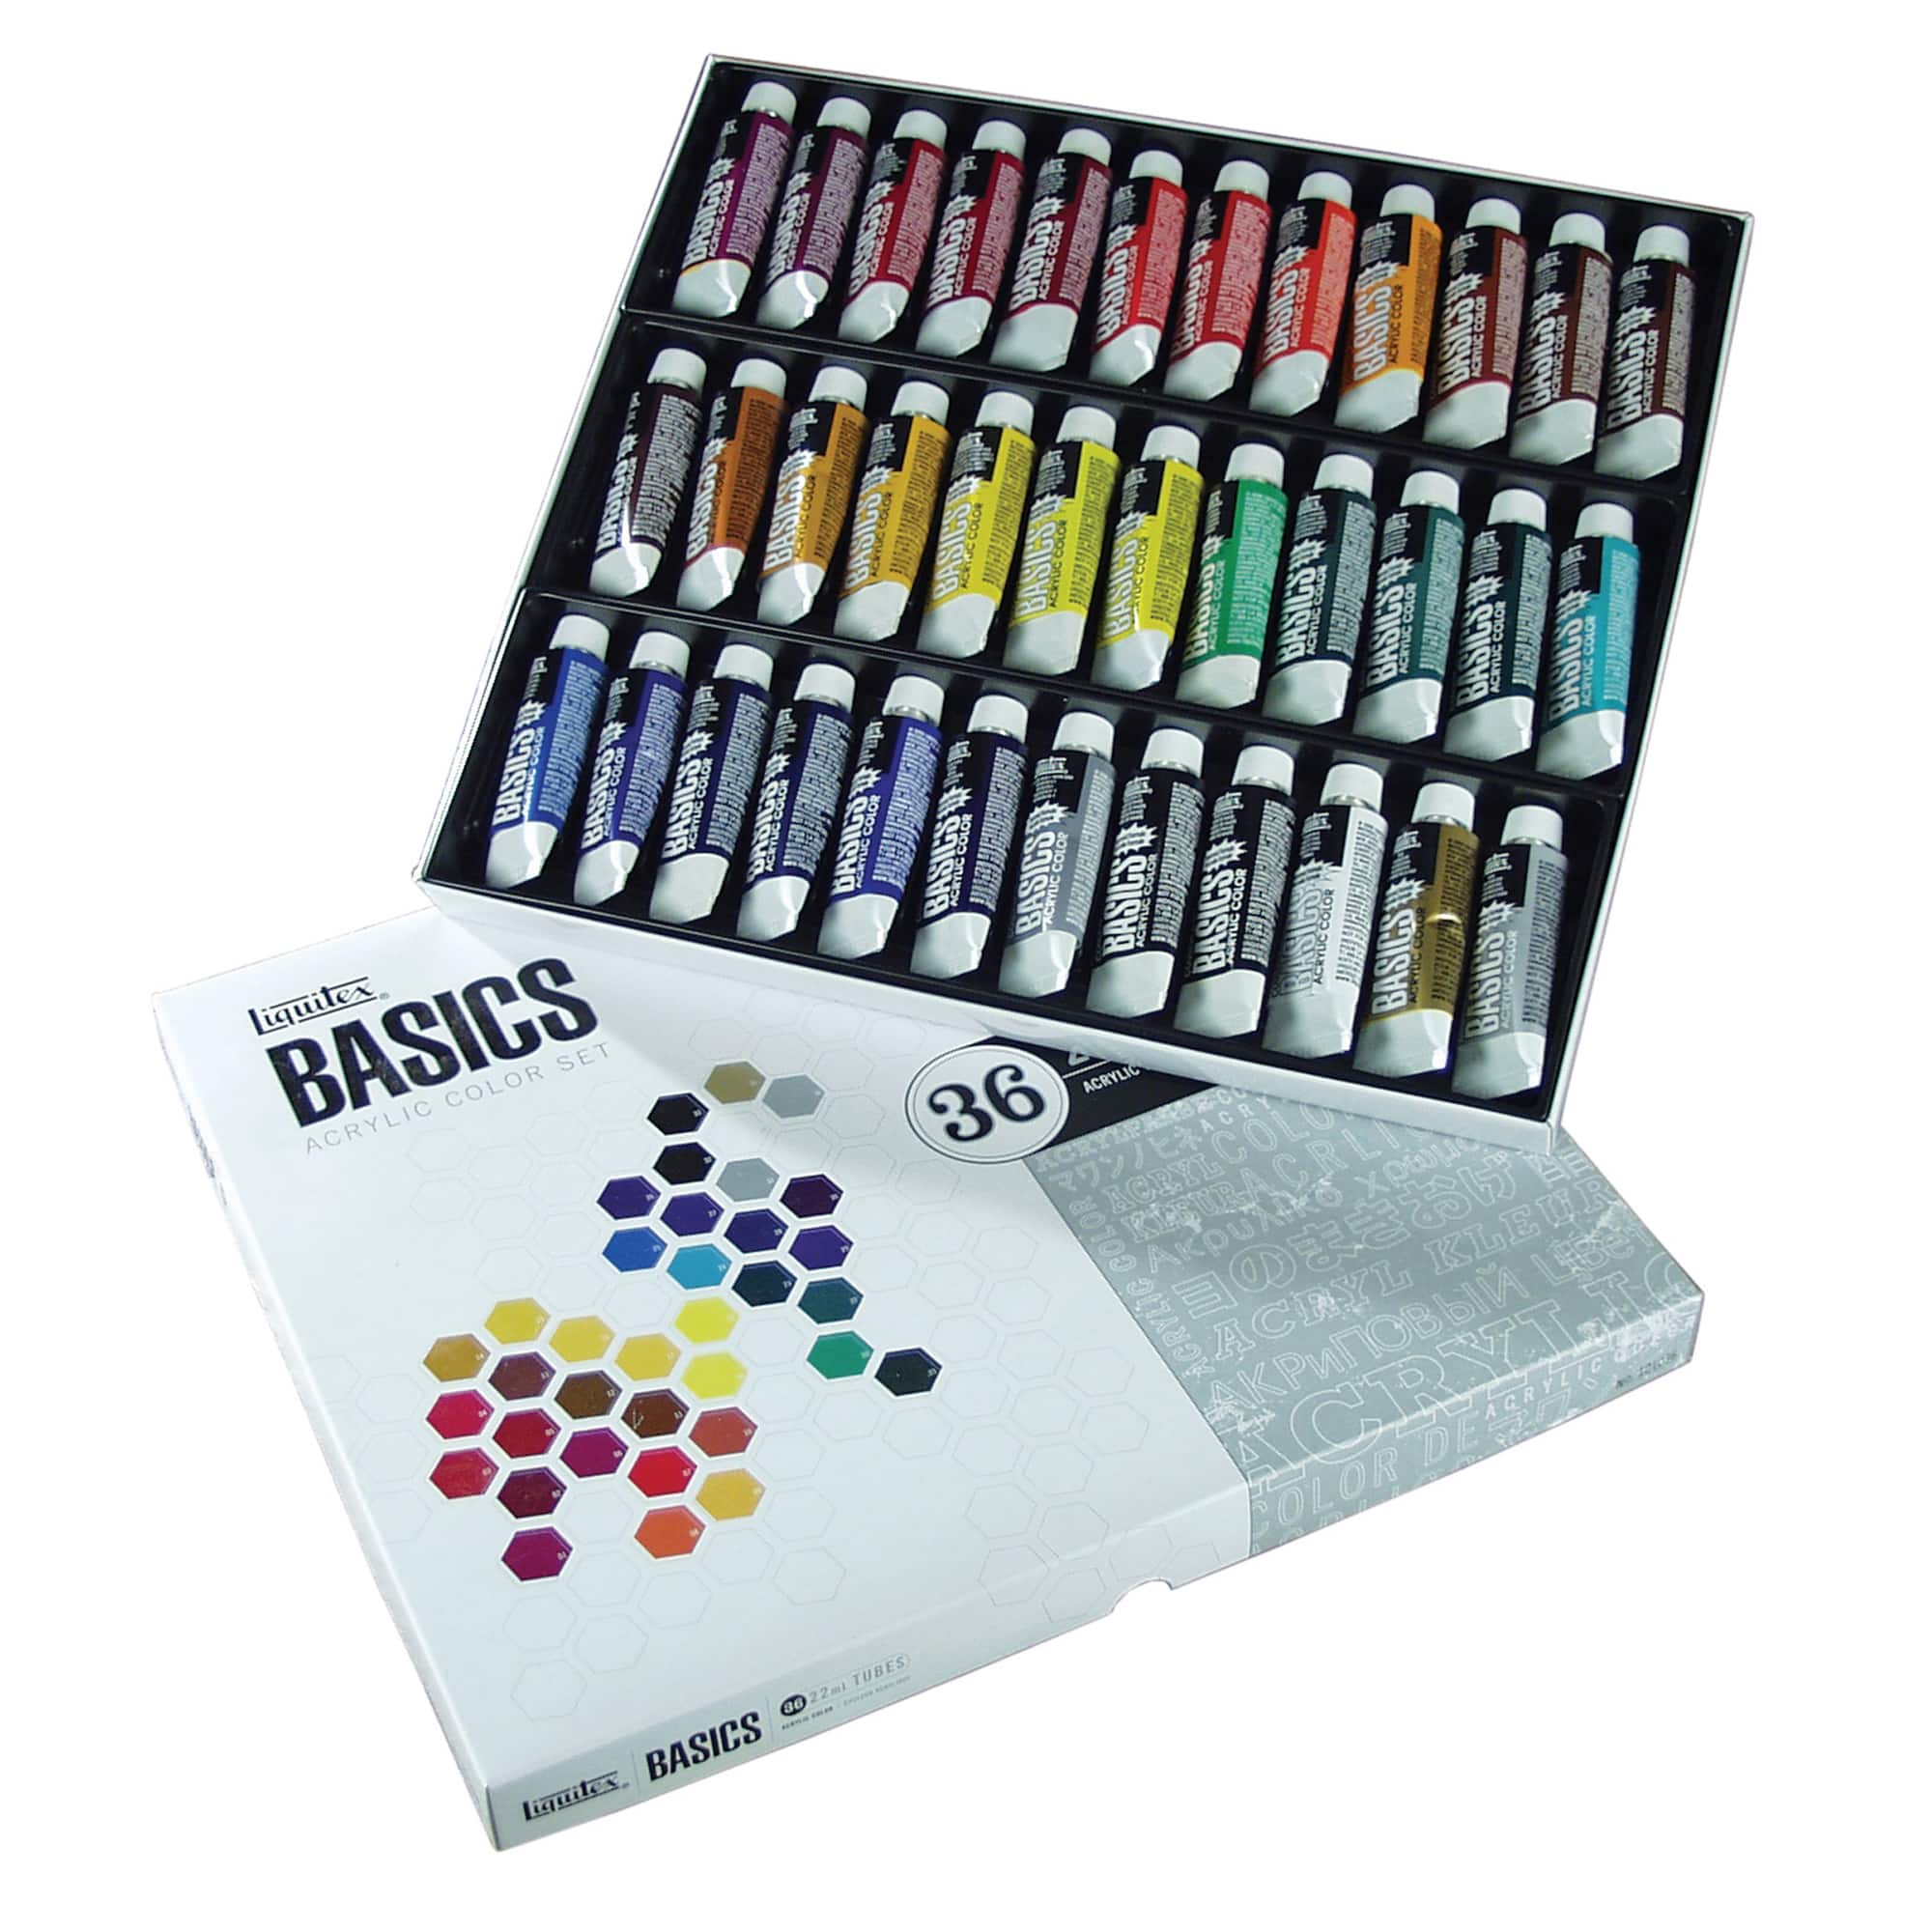 Acrylic starter kit - Pastel Colors